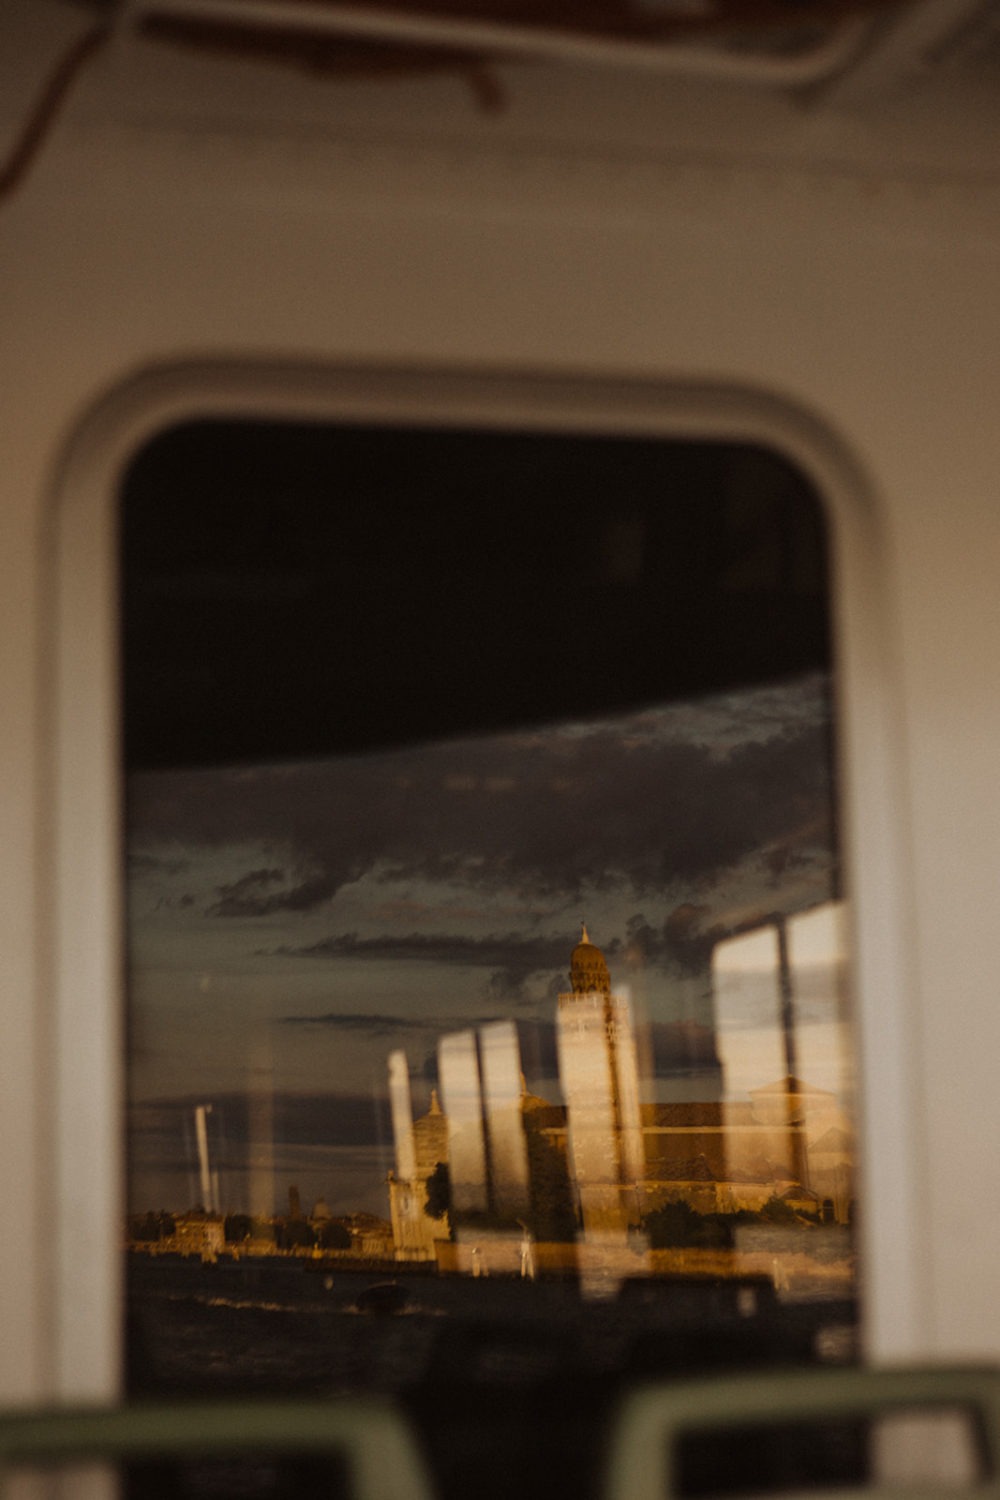 Reflection of city through train window captured by destination wedding photographer